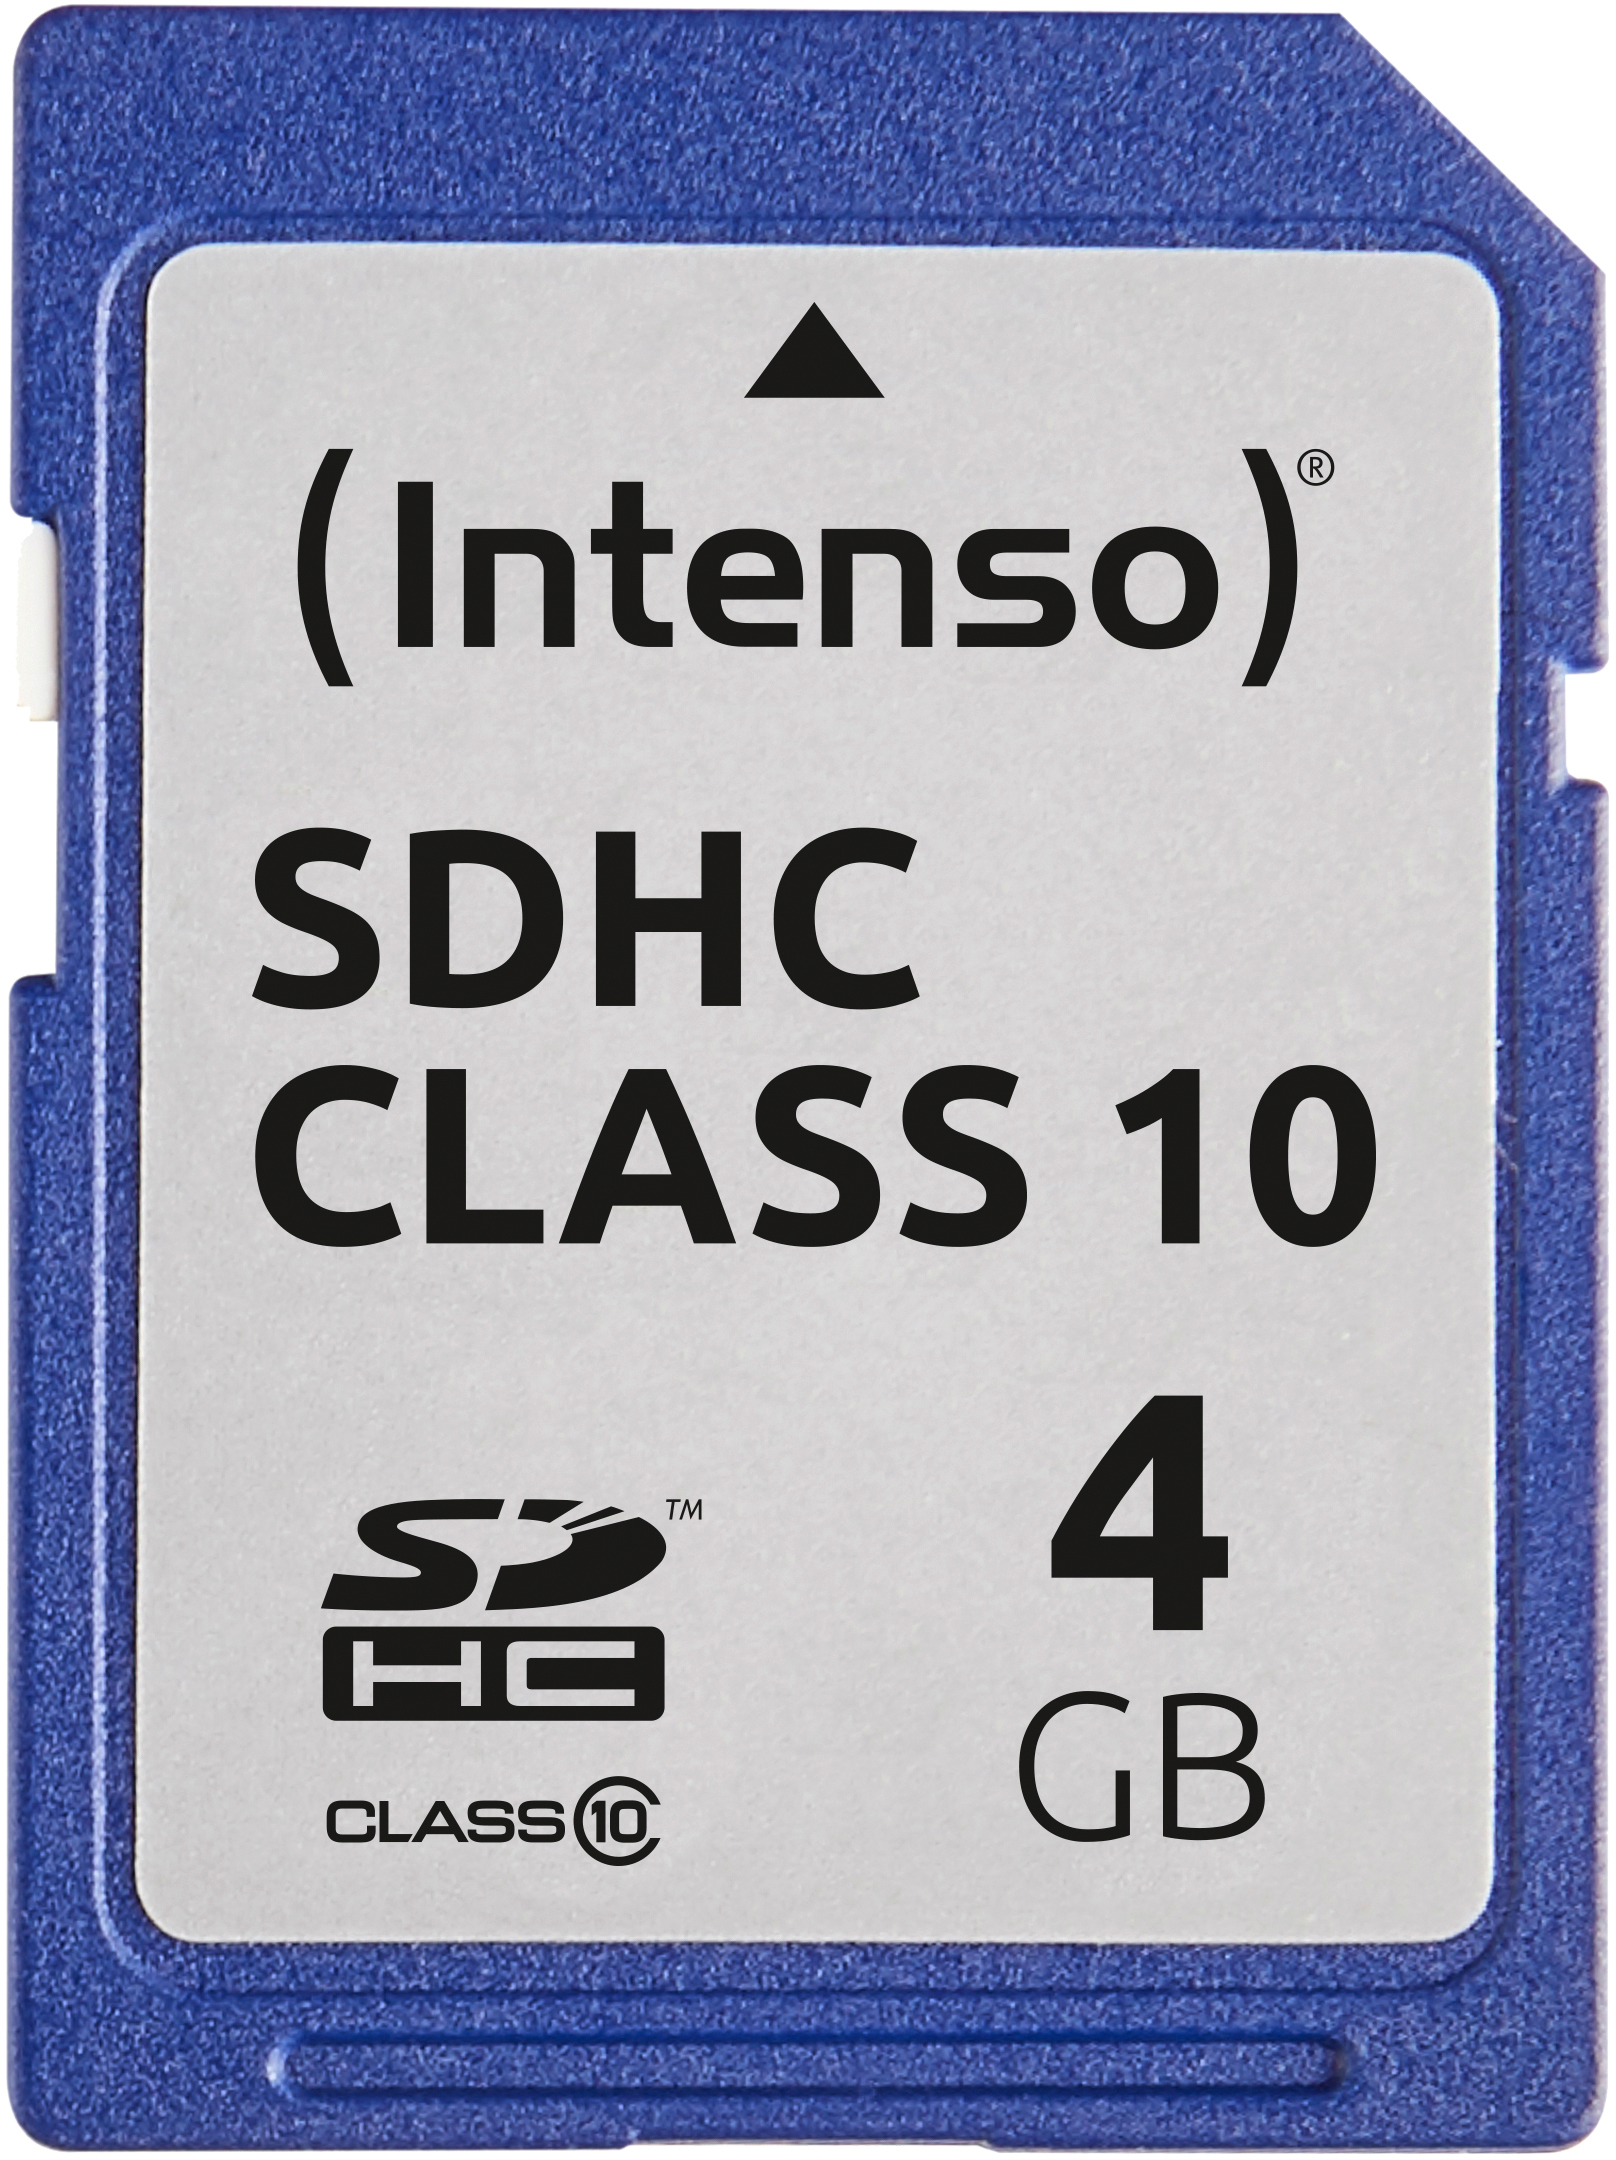 INTENSO SDHC Card Class 10 4GB 3411450